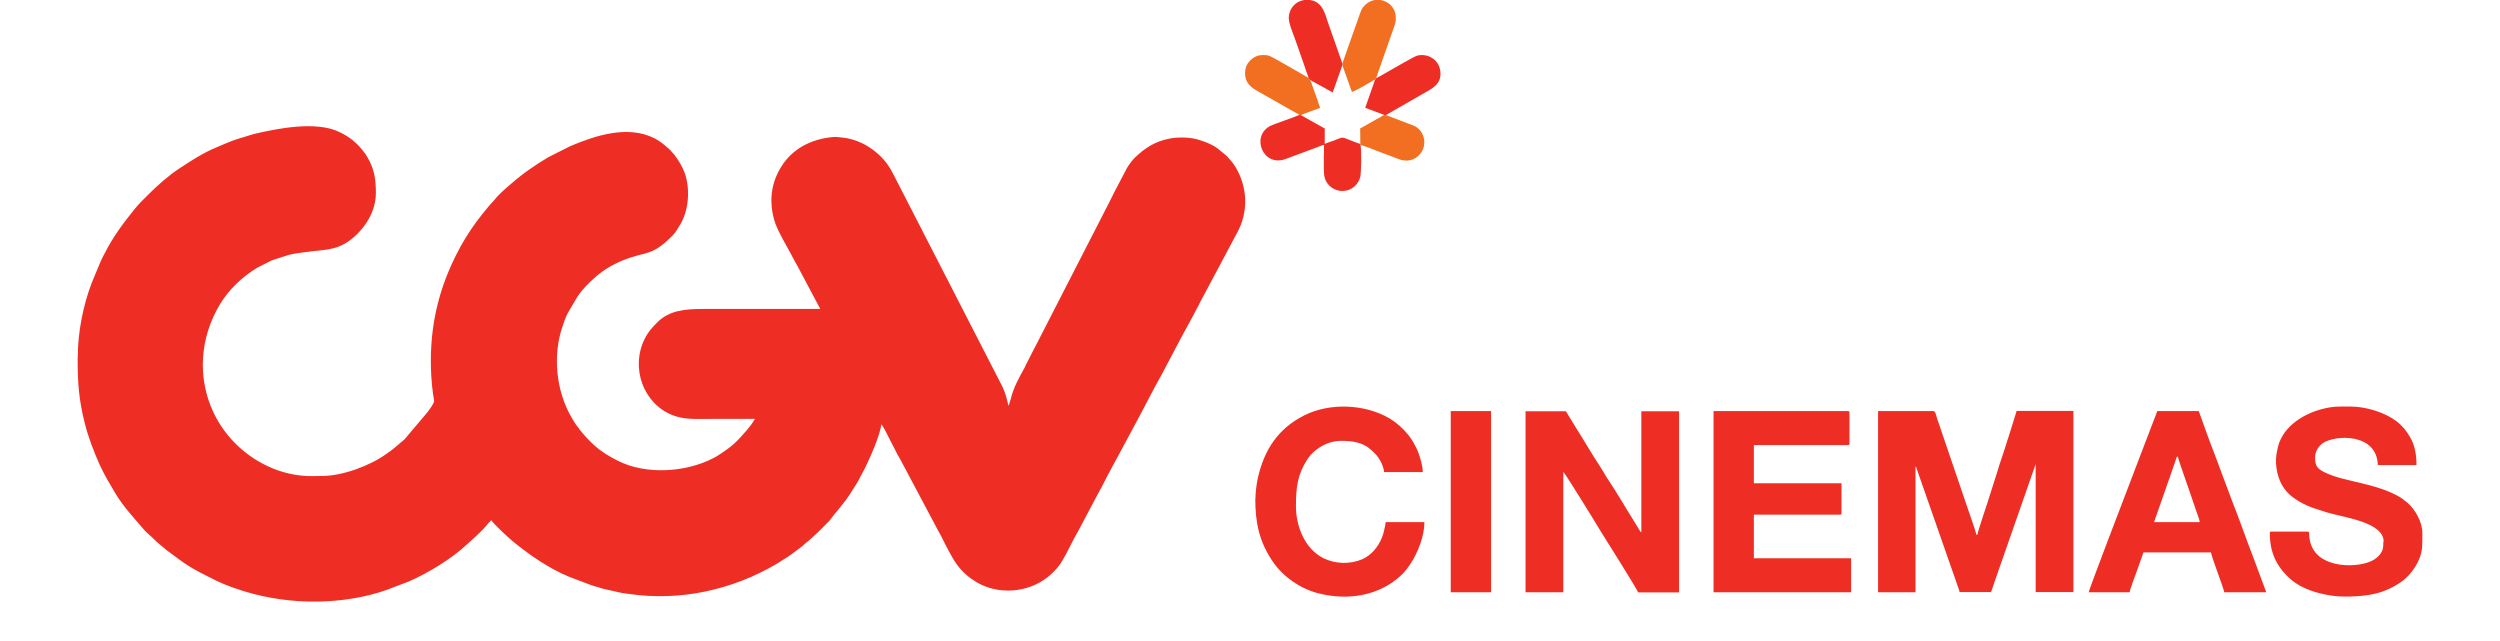 Logo of CGV Cinemas